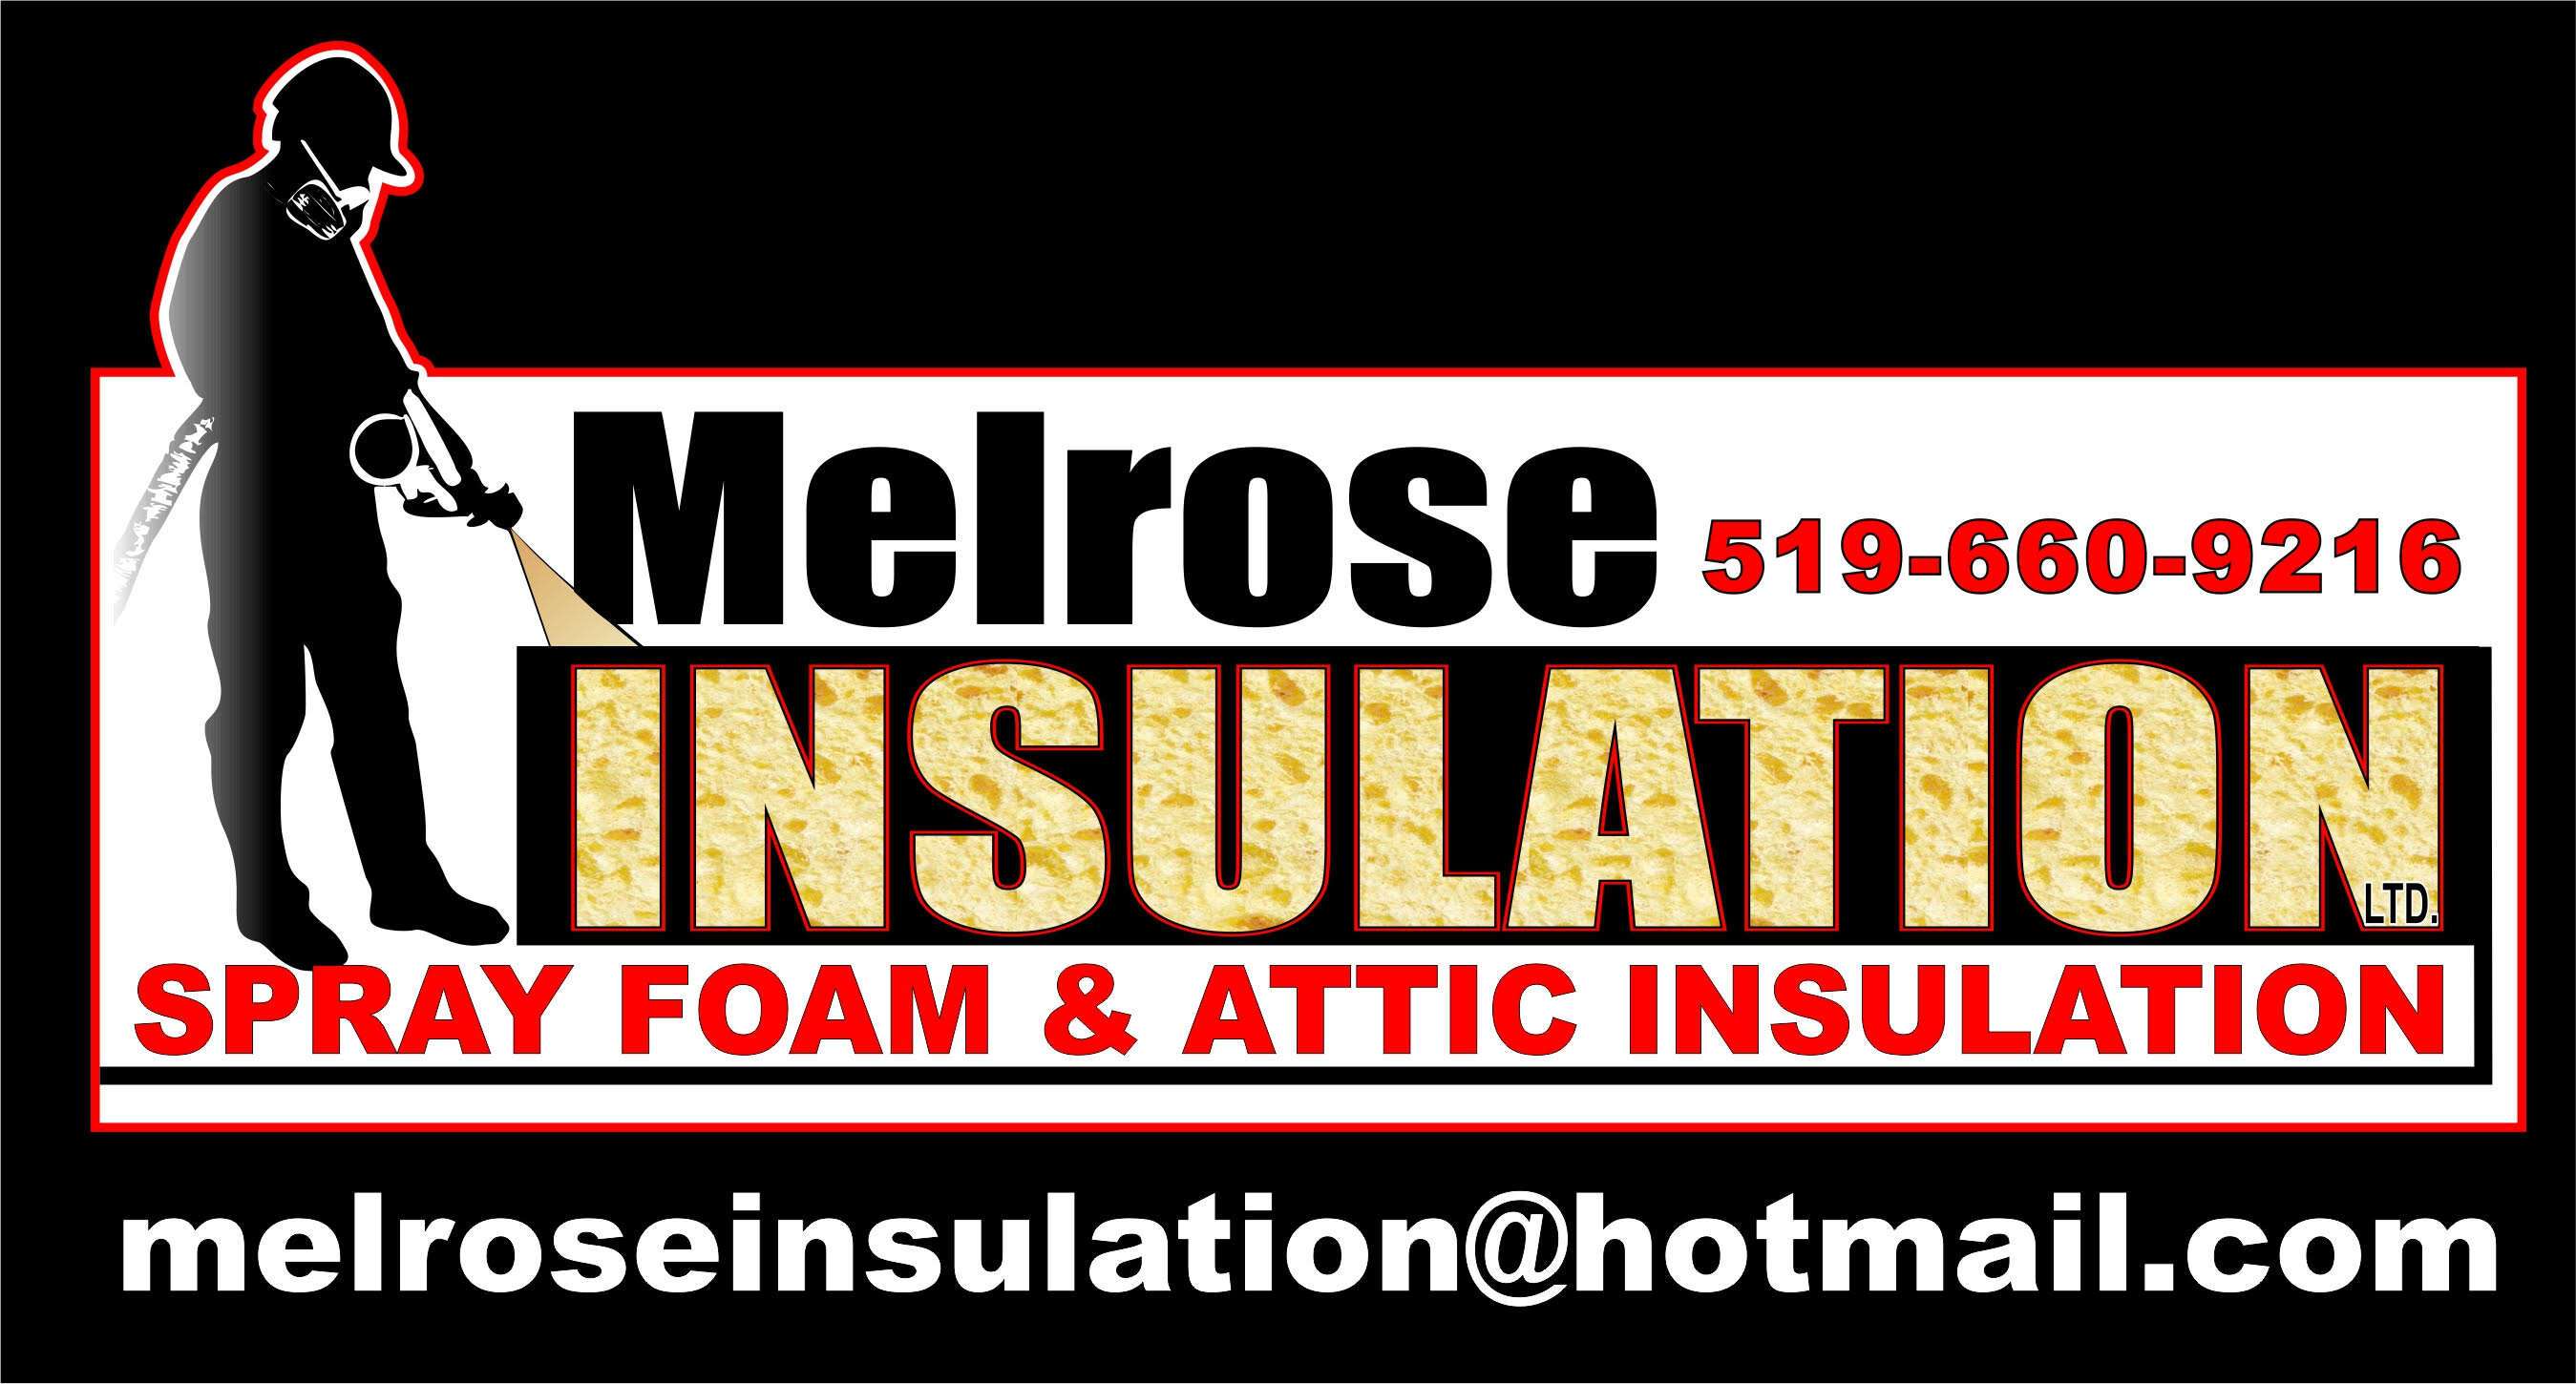 Melrose Insulation Ltd.